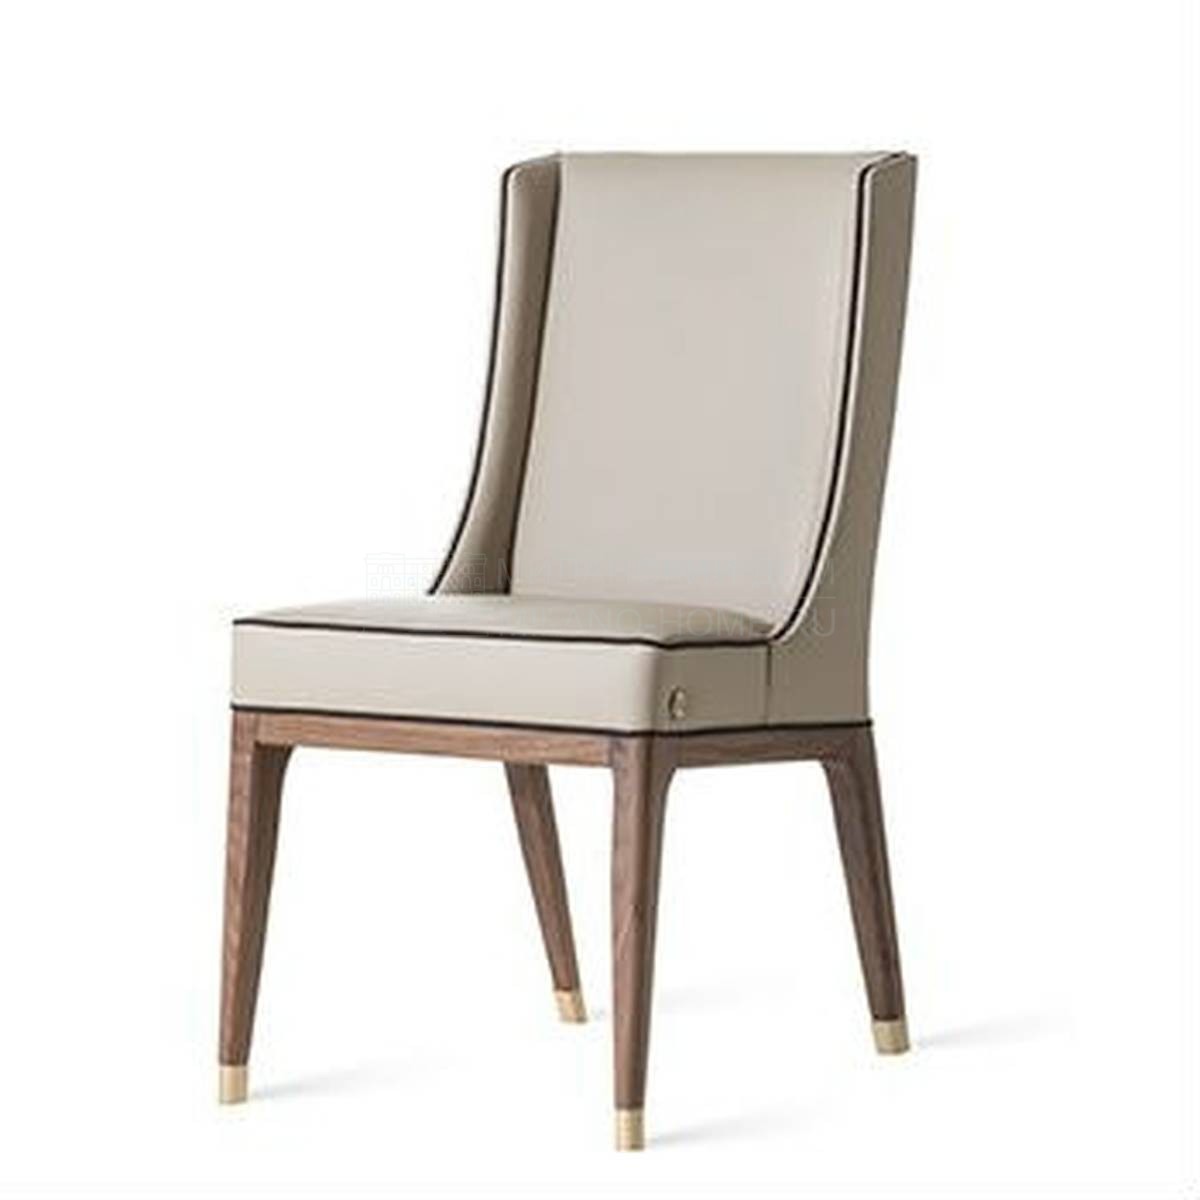 Кожаный стул Chiara из Италии фабрики MEDEA (Life style)